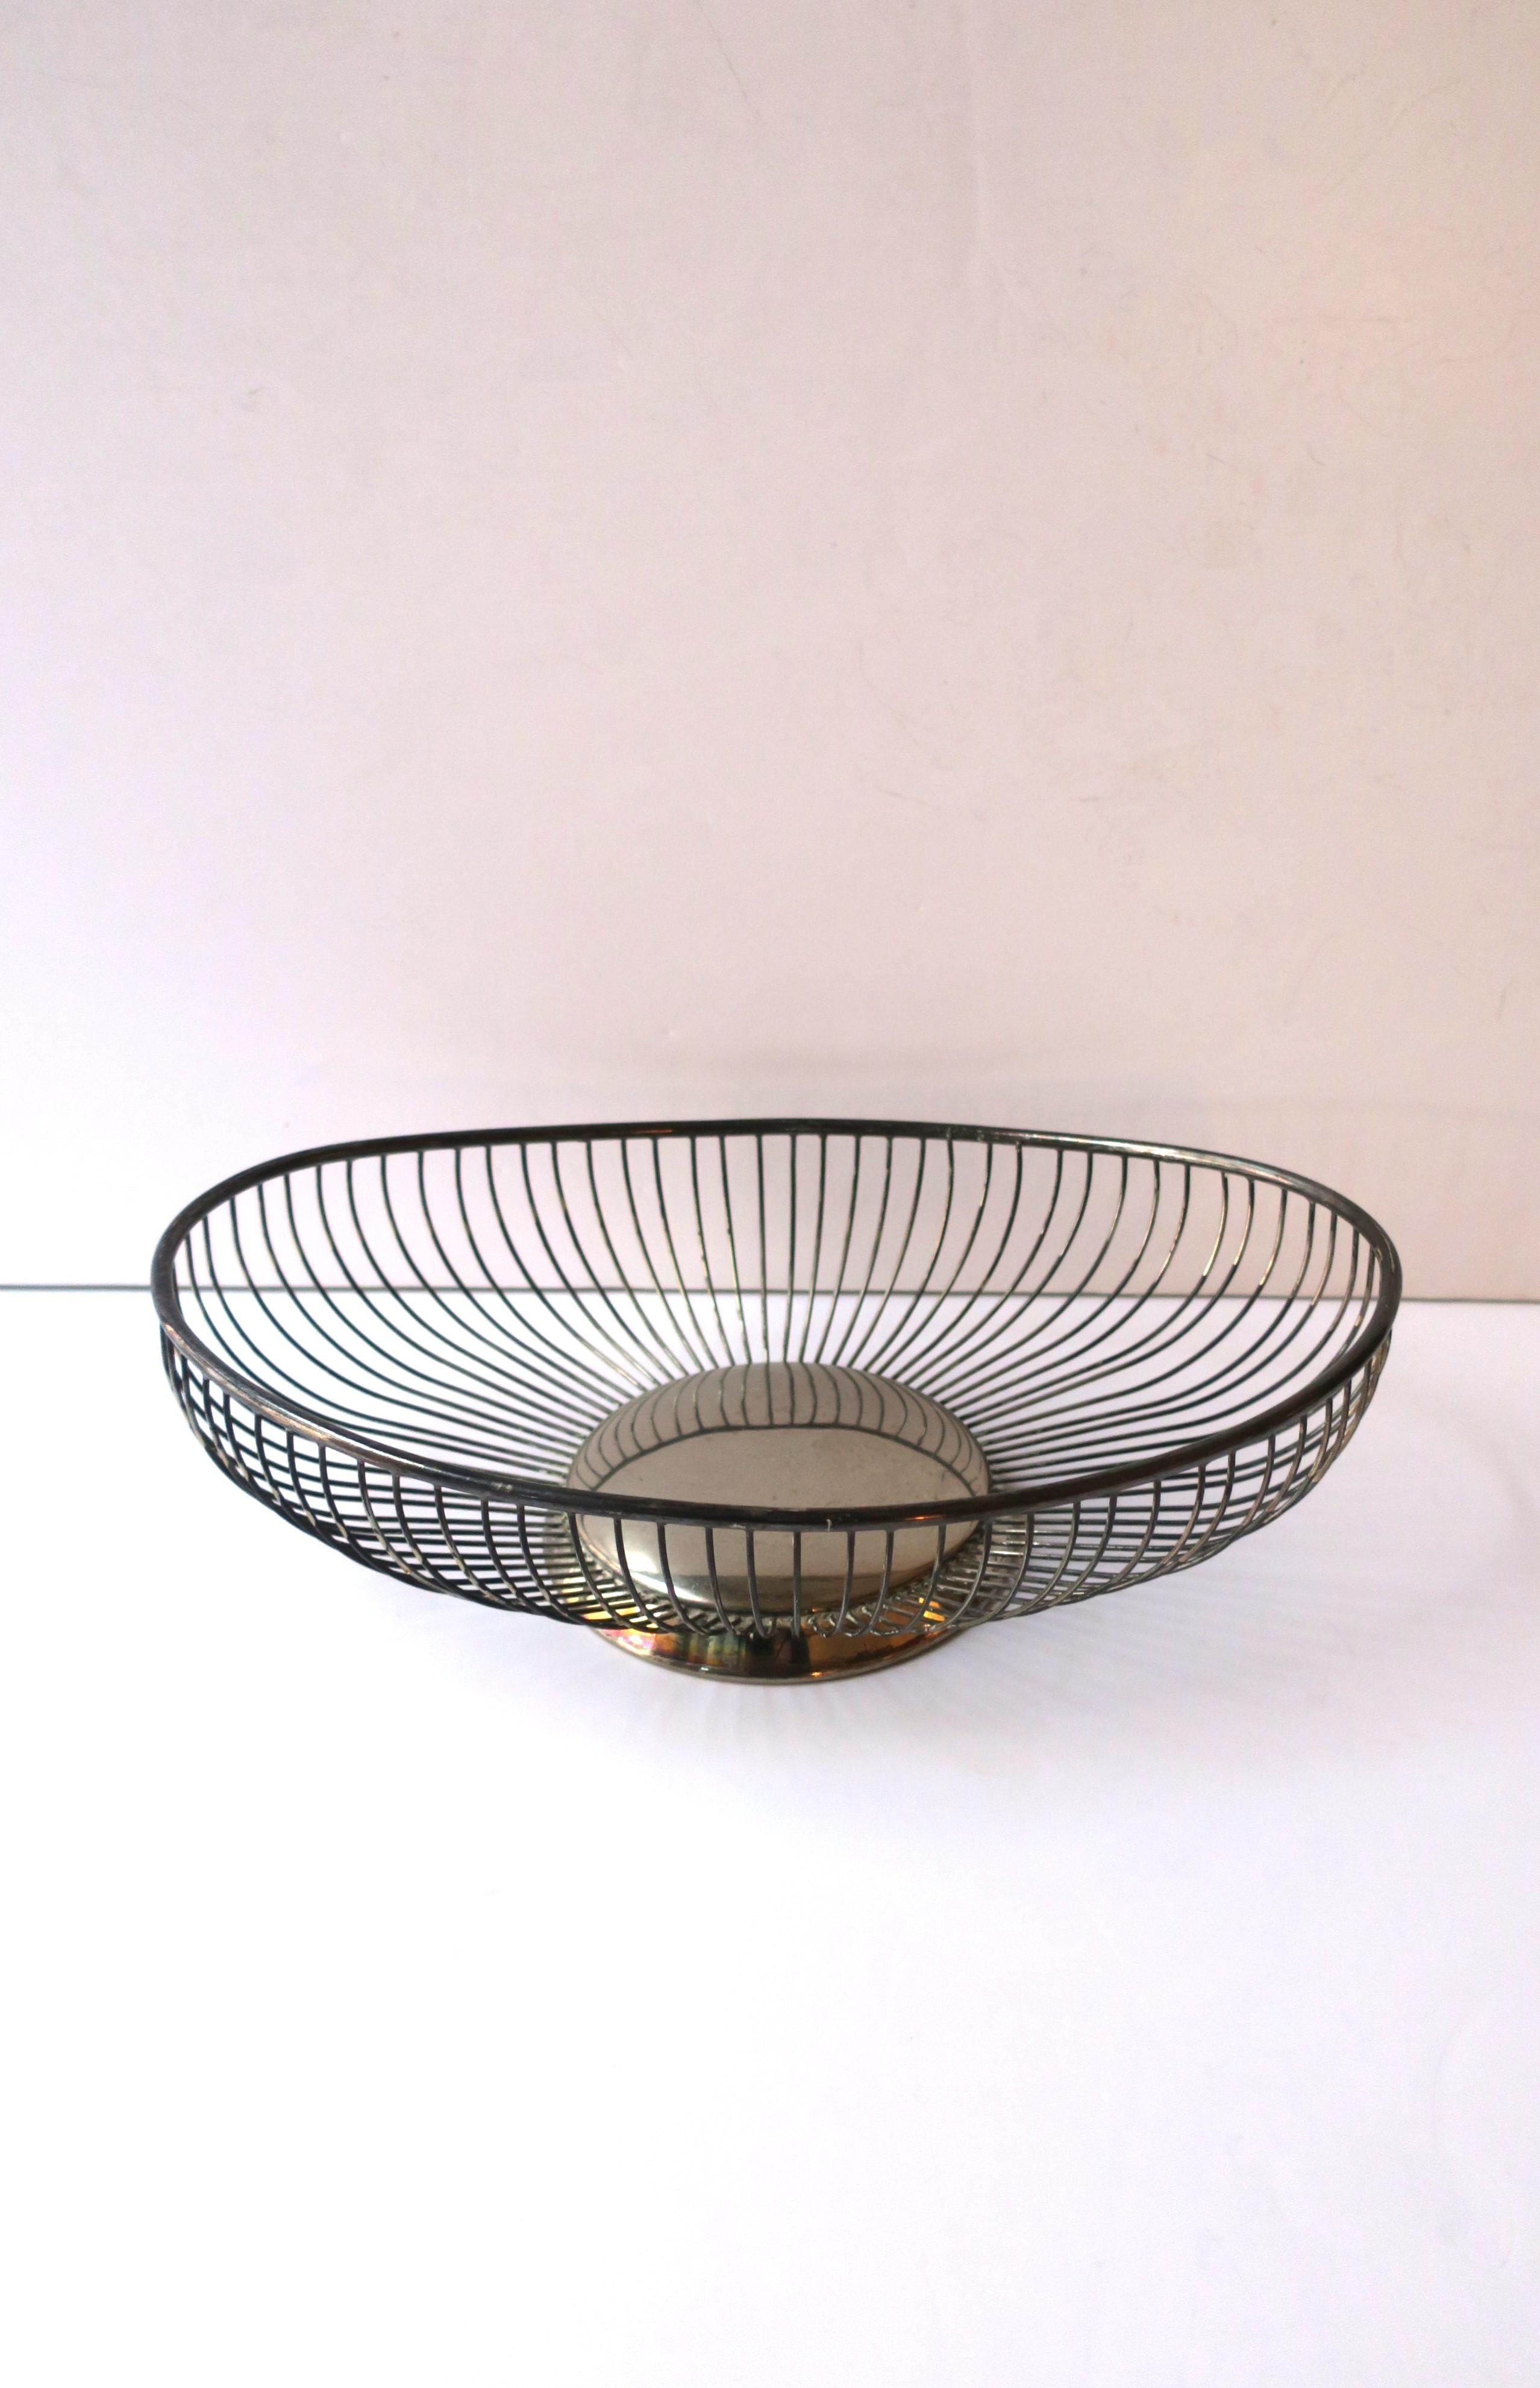 Italian Midcentury Modern Silver Plate Wire Basket For Sale